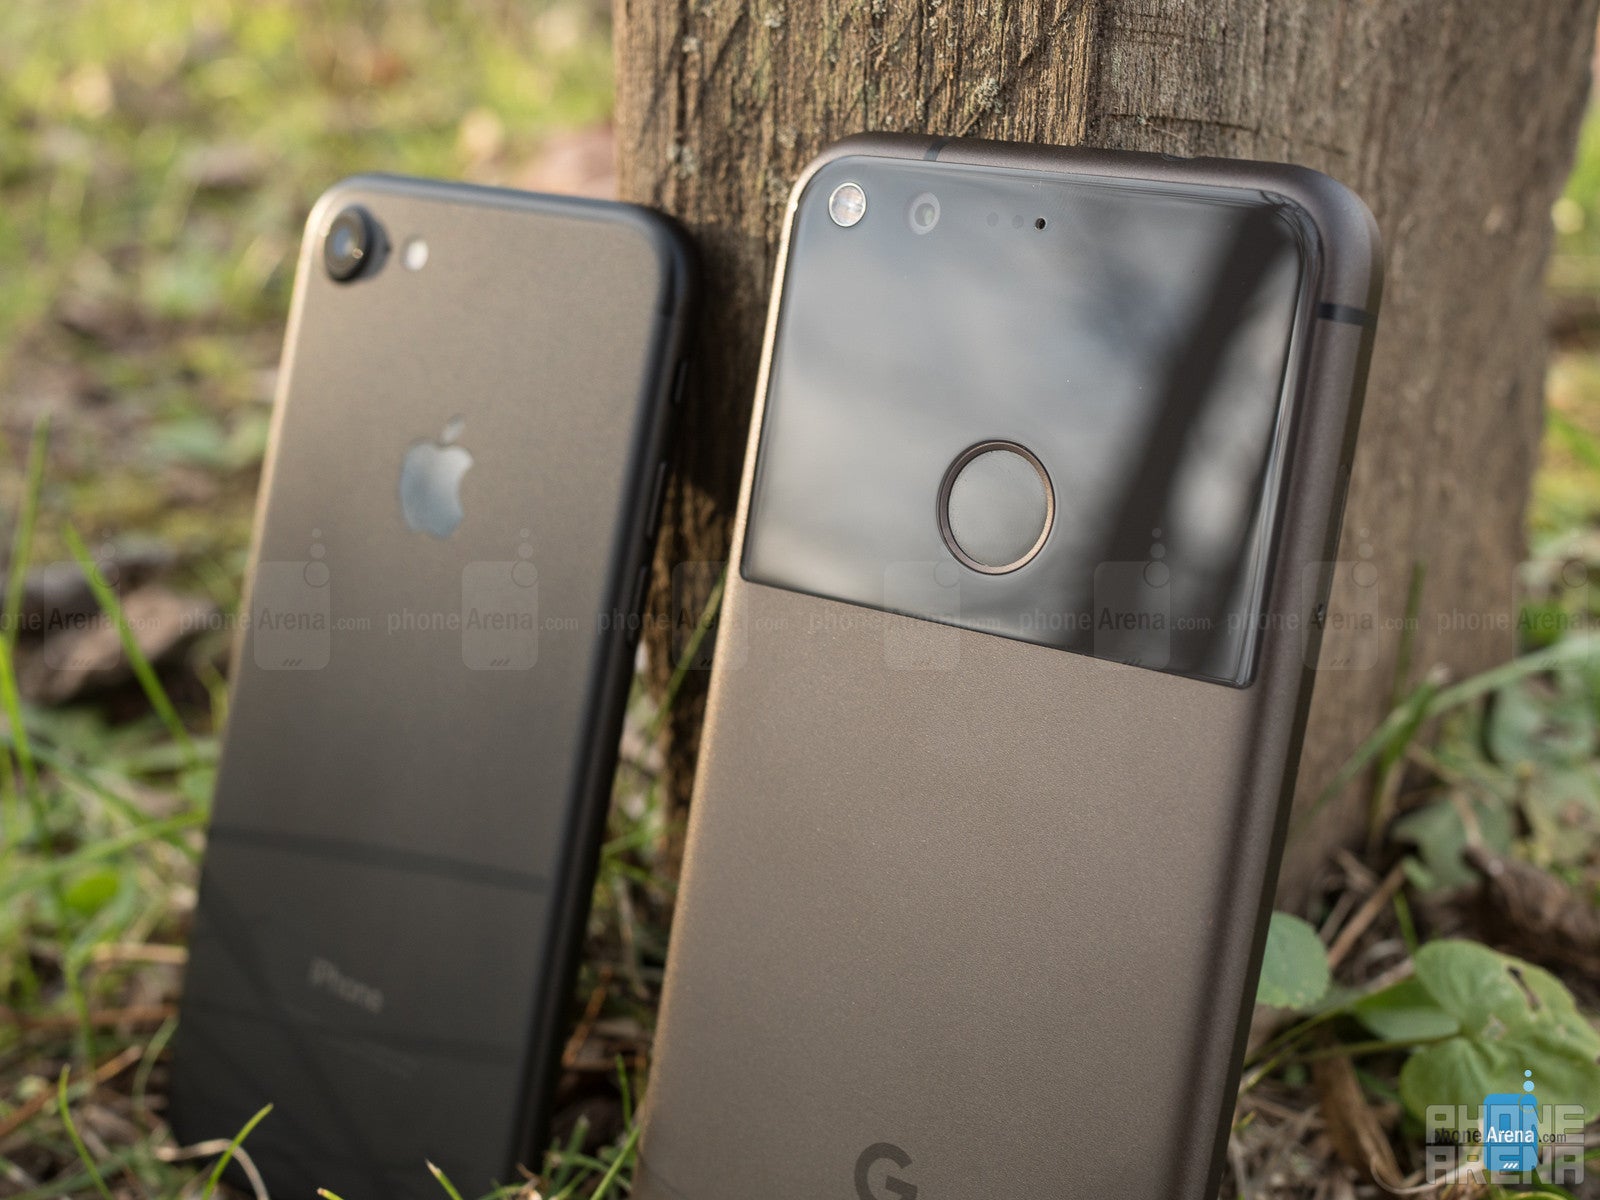 Google Pixel vs Apple iPhone 7